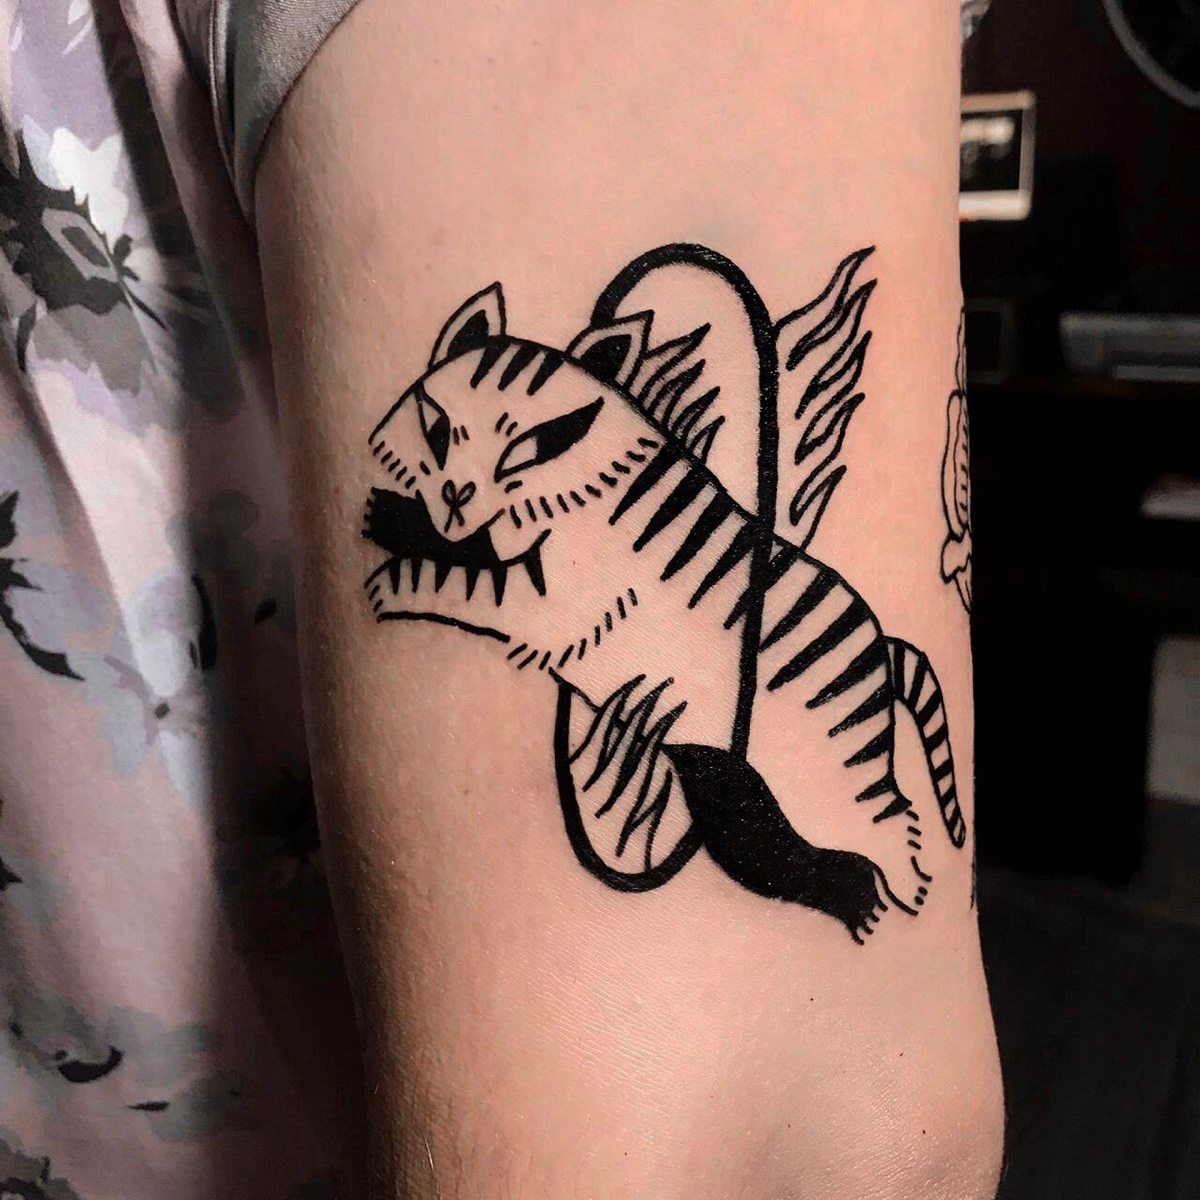 El Salvador tattoo black ink linework tiger heart self love skull feminism